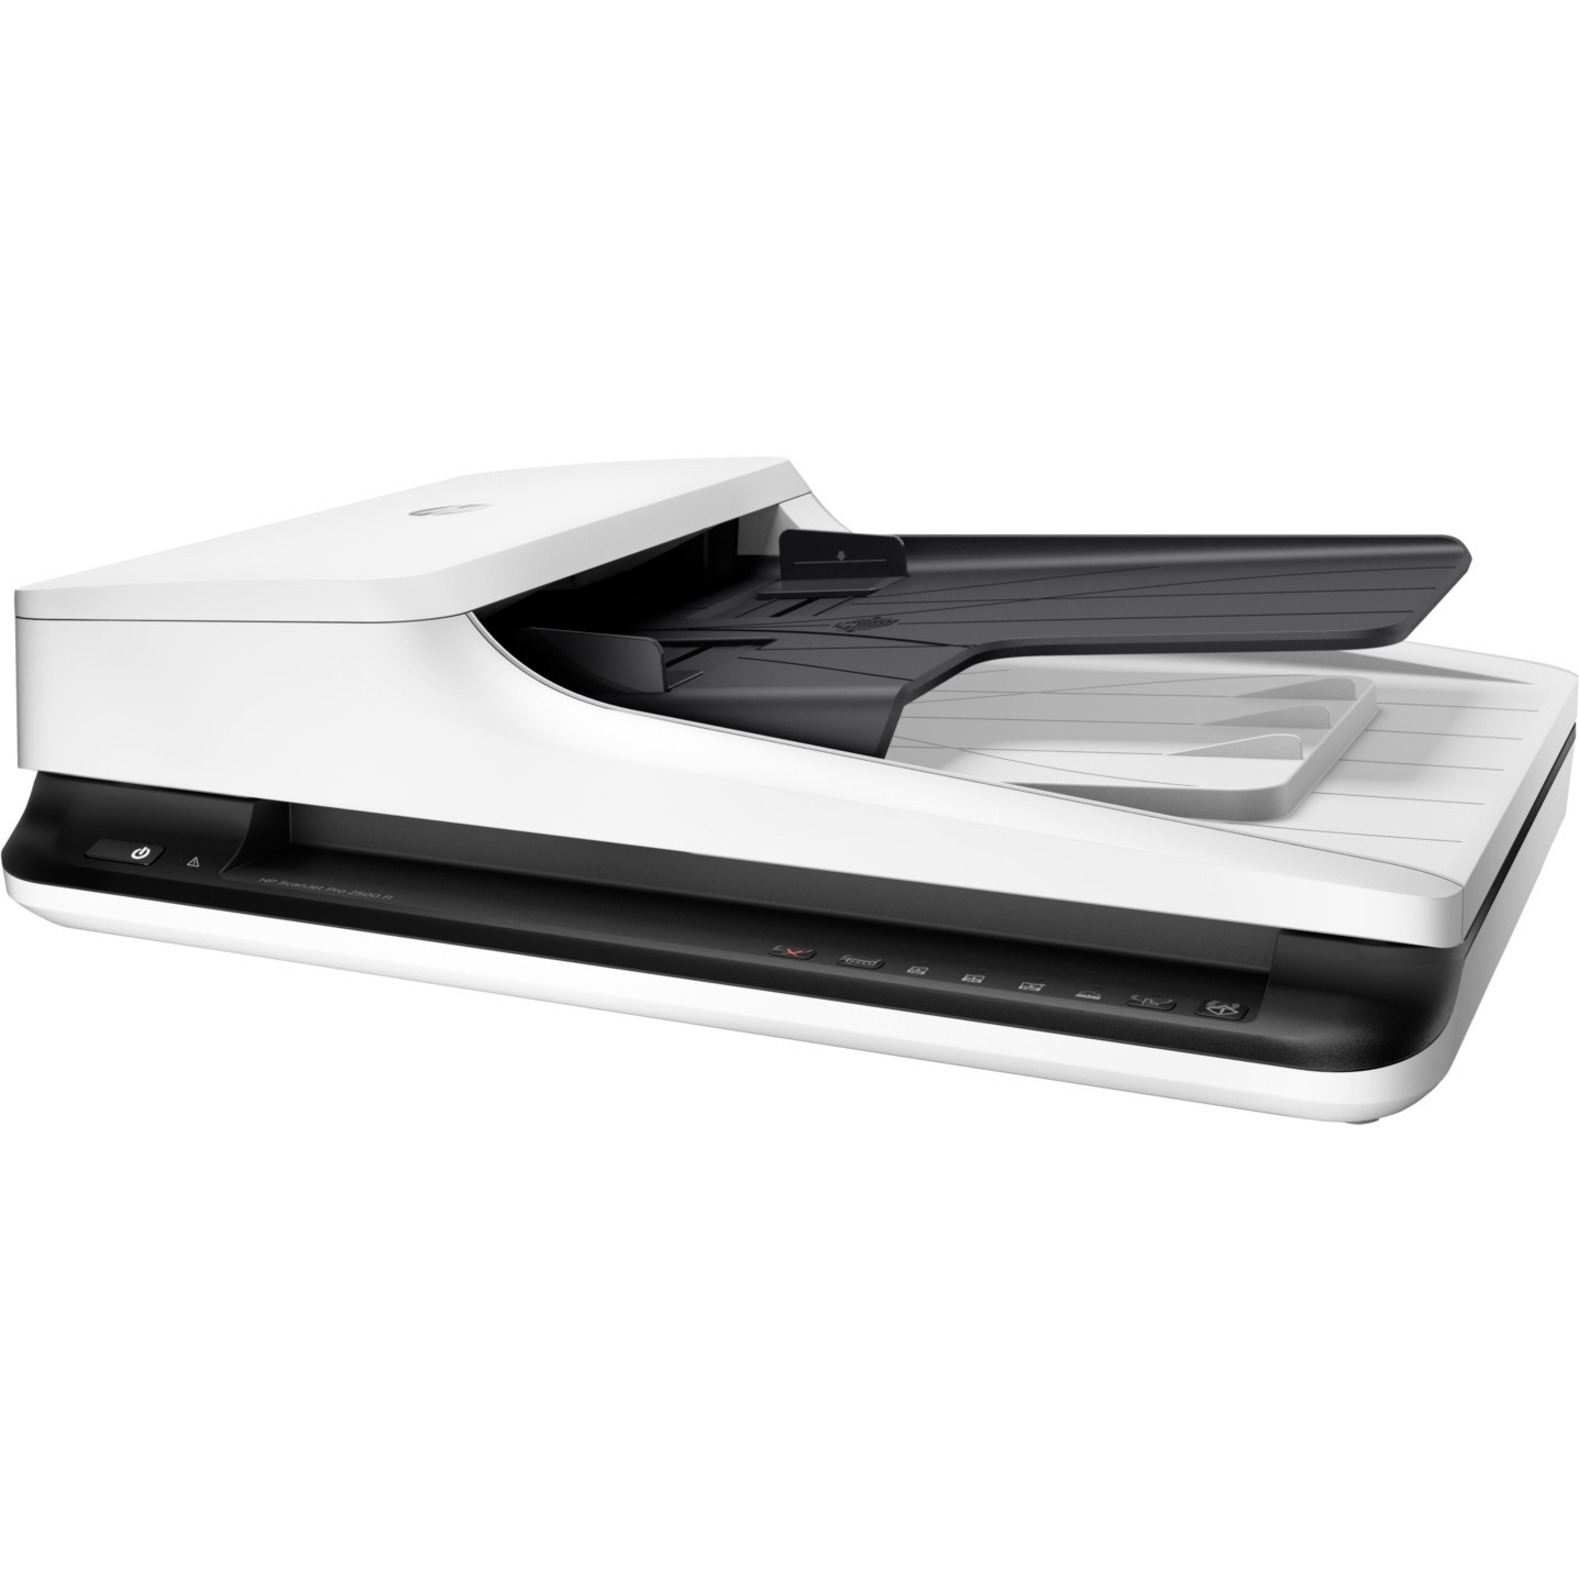 HP Scanjet Pro 2500 f1 - document scanner - image 3 of 4